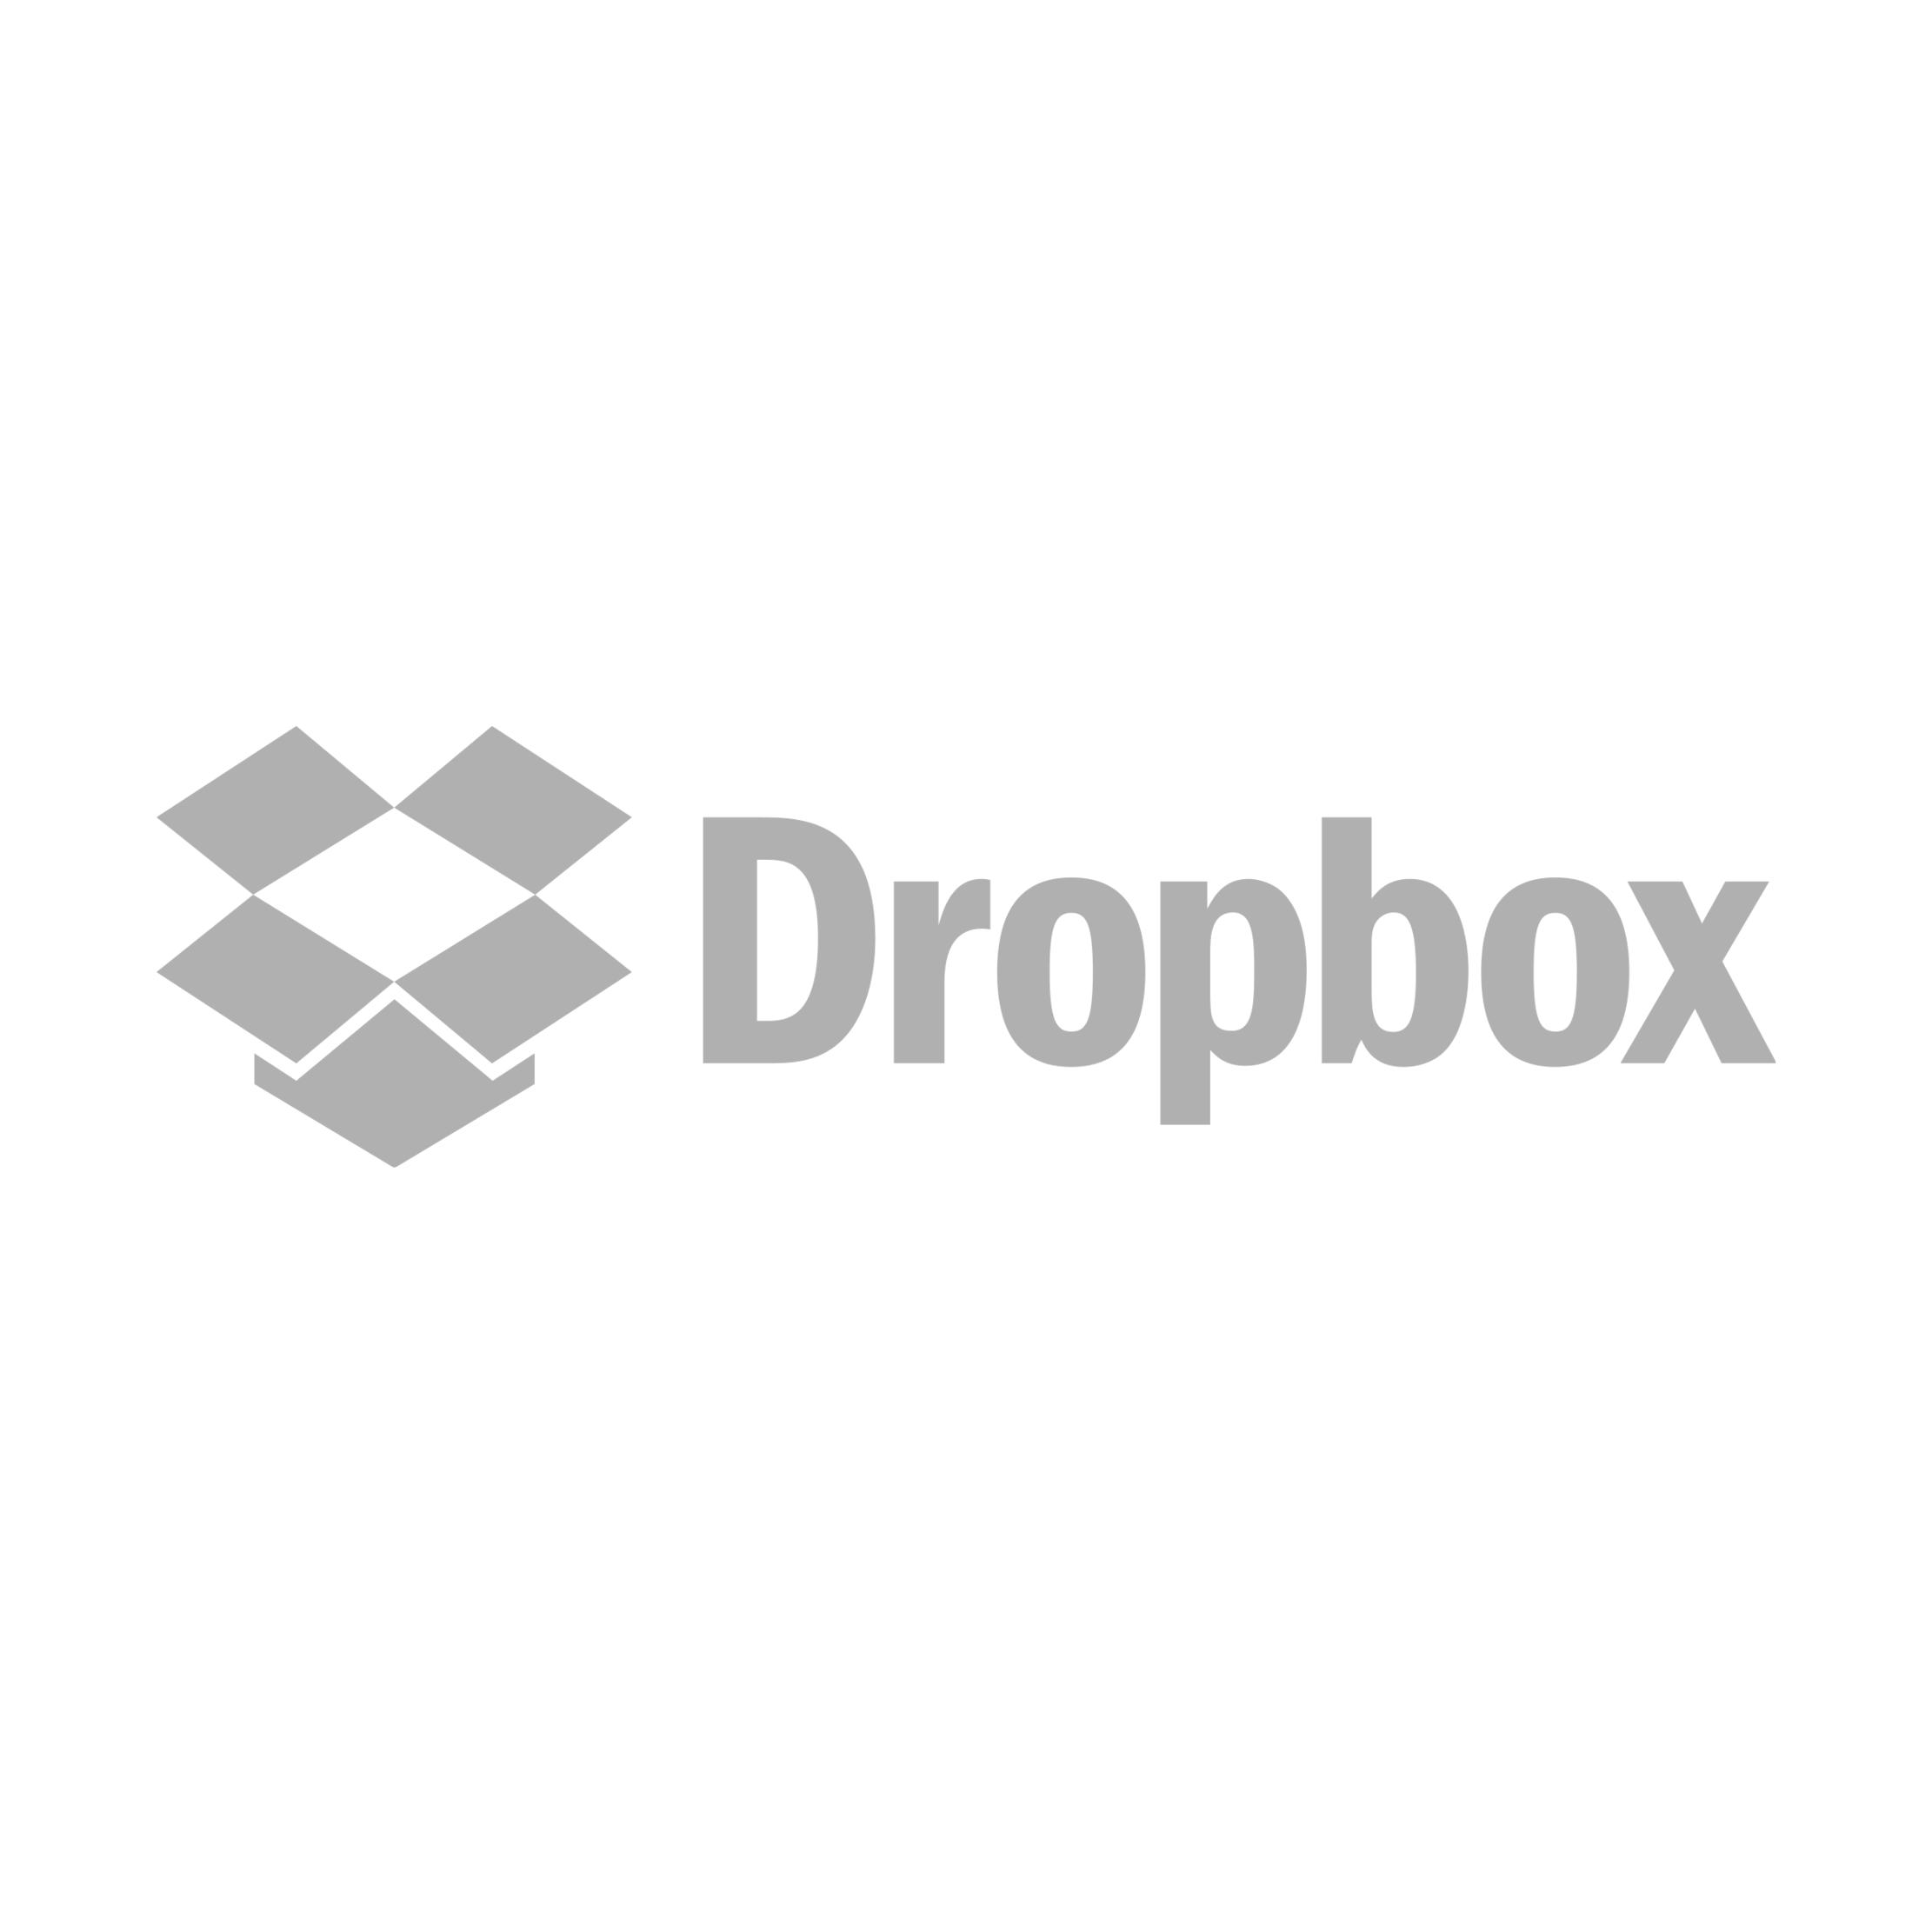 Evolution_DropBox_Logo.png